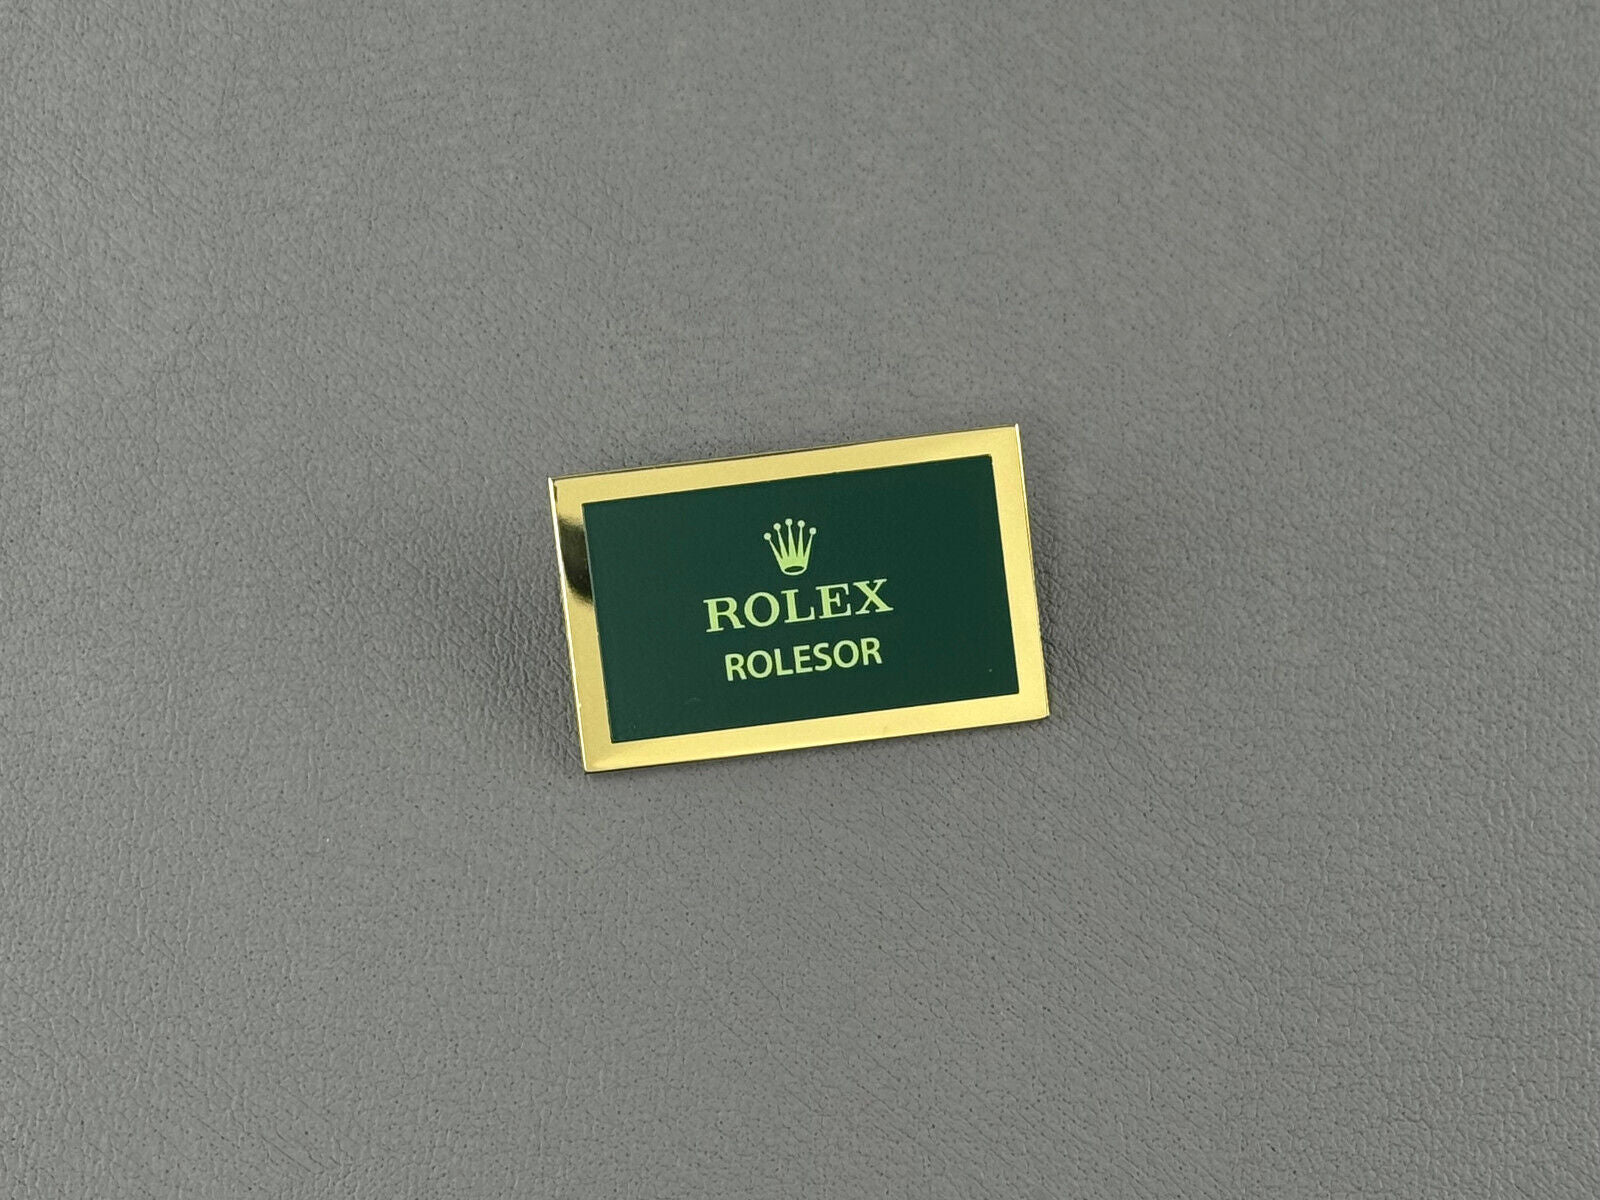 Rolex Rolesor Concessionaire Display